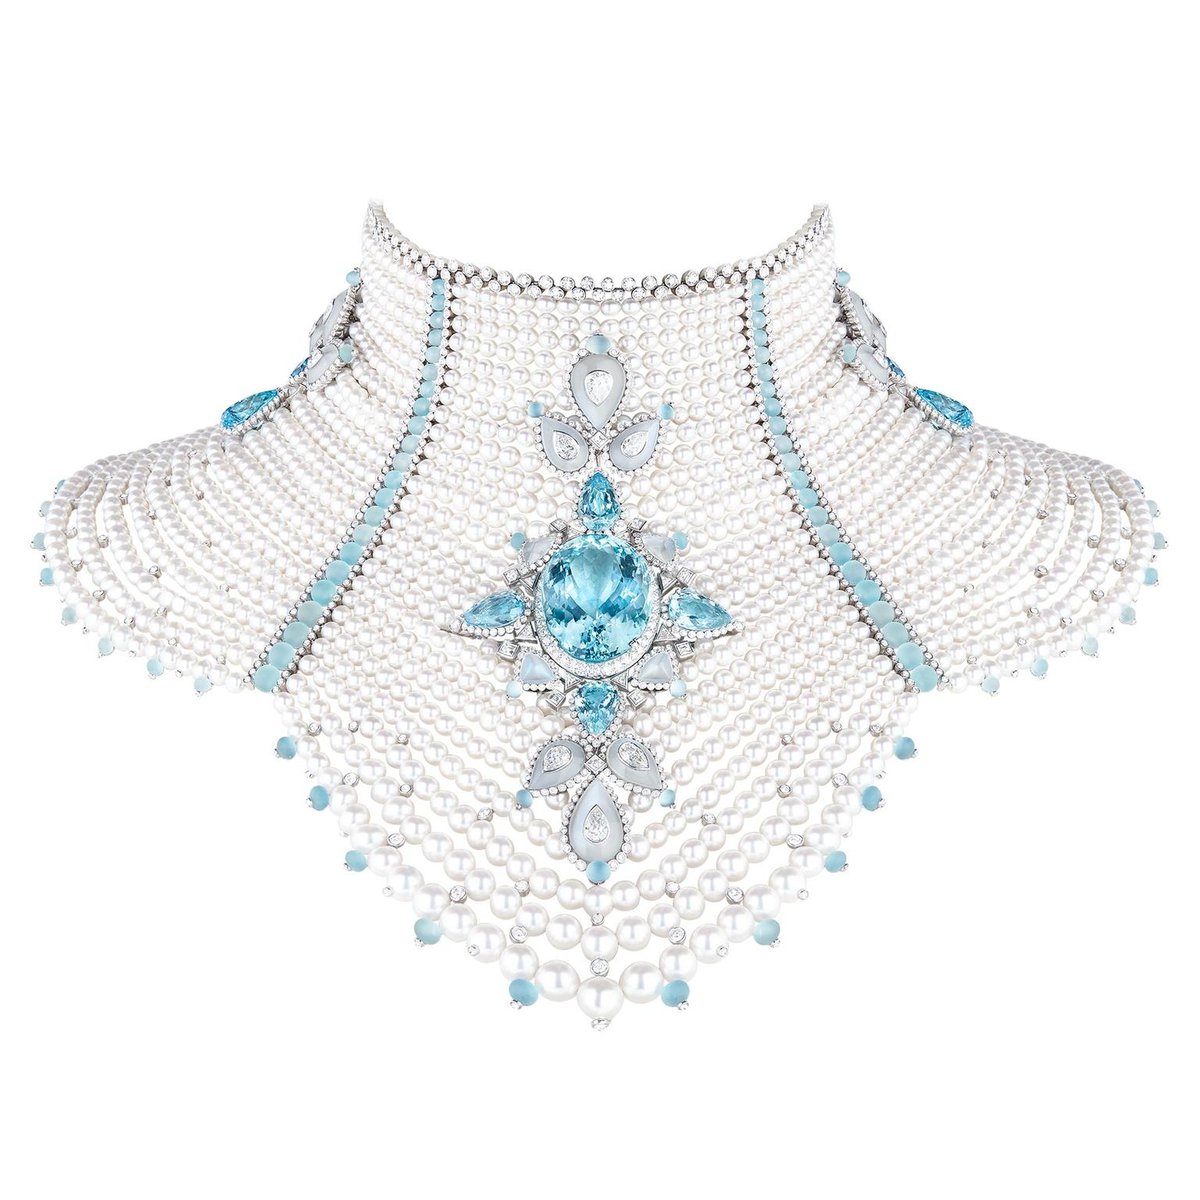 Aktgw — aquamarine (the necklace is stunning)